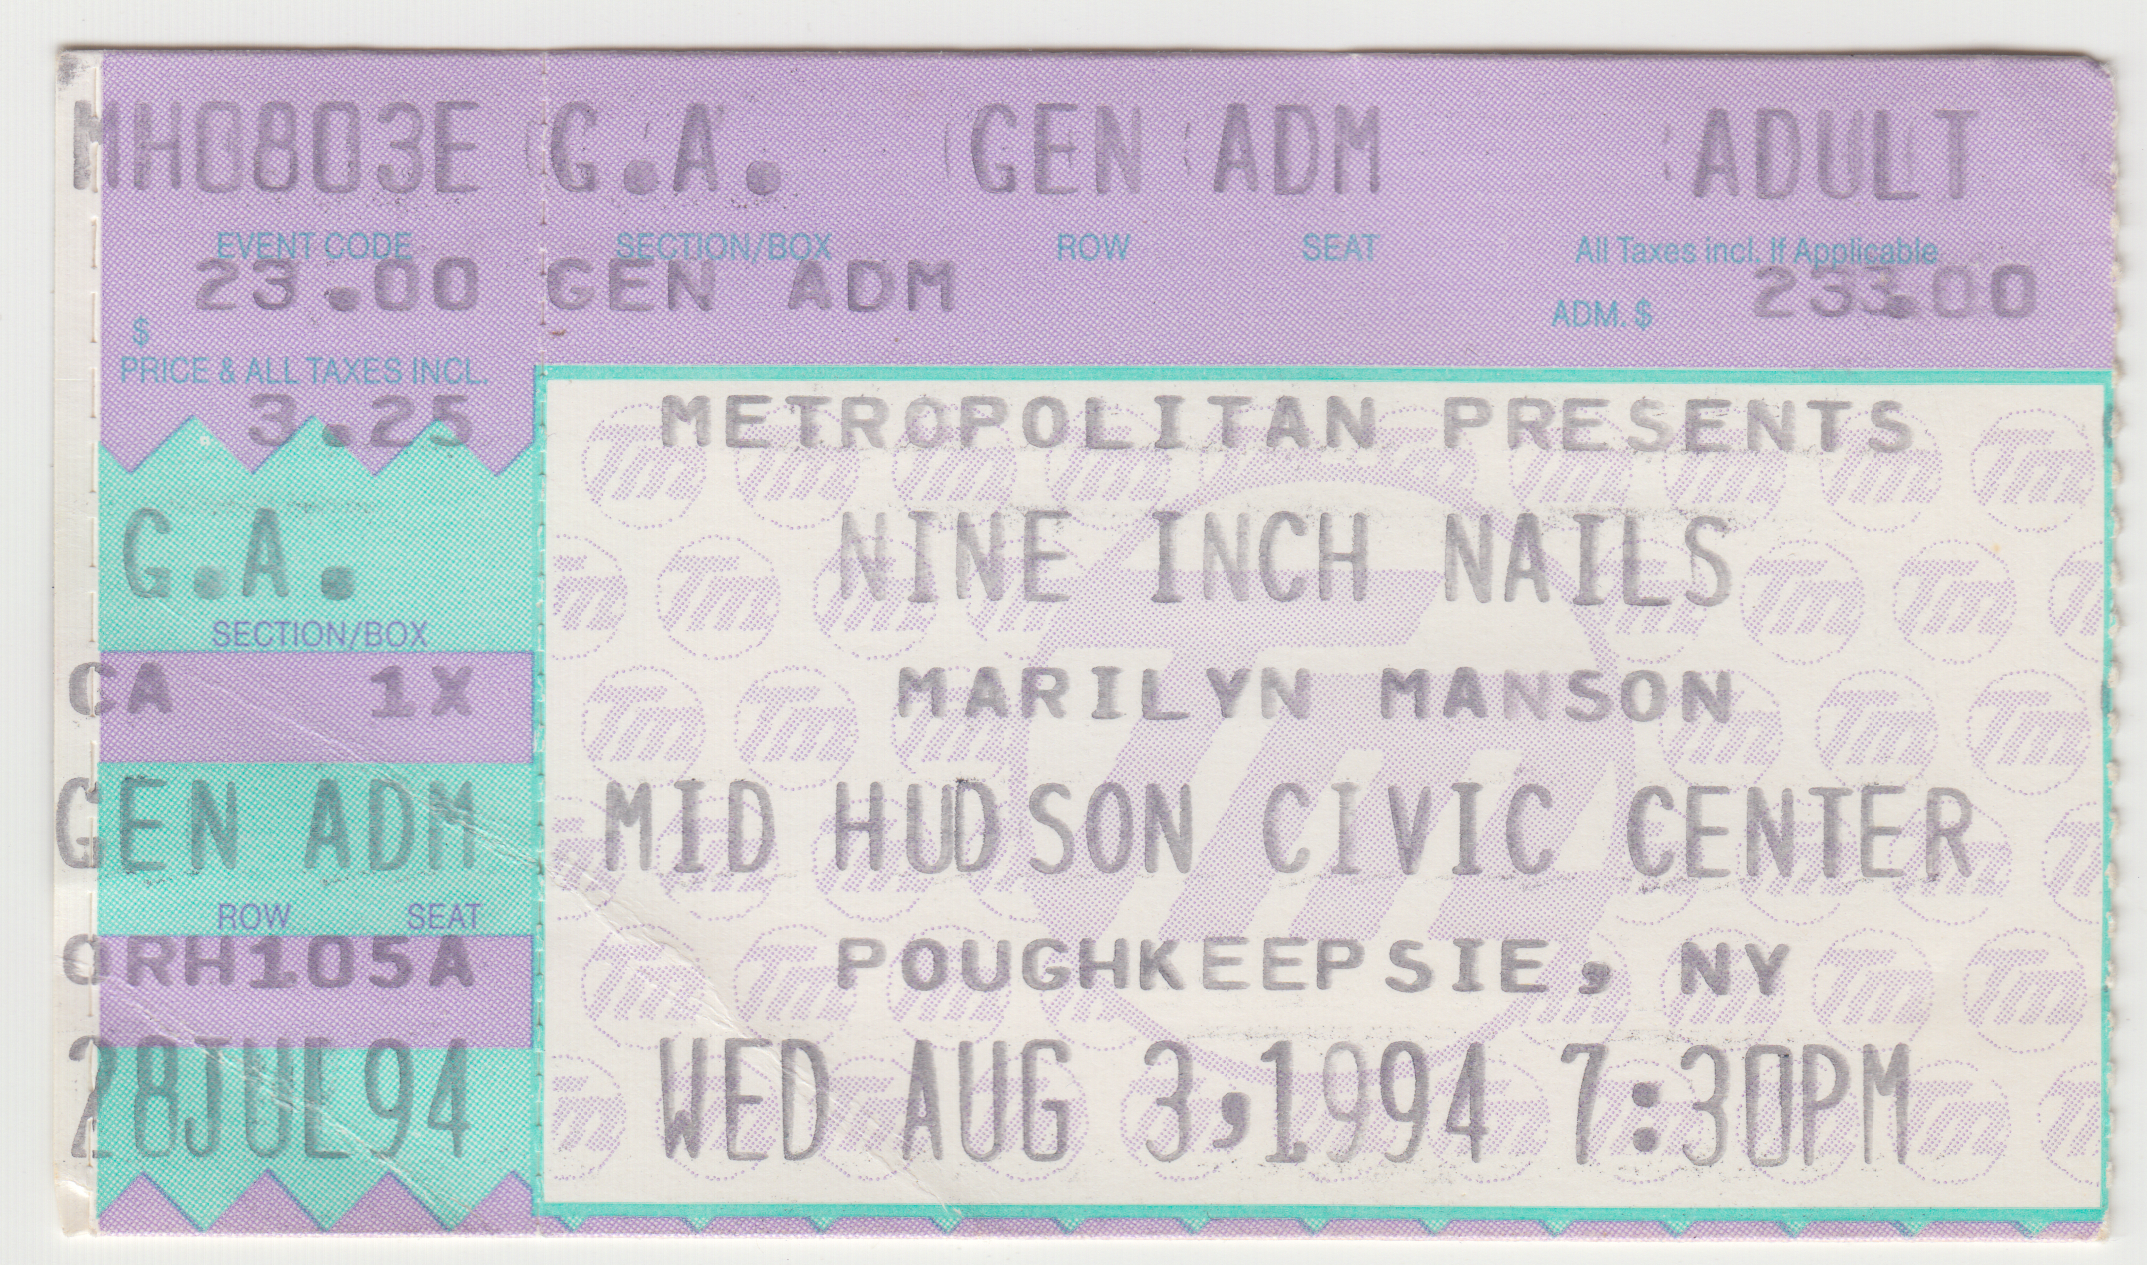 1994/08/03 Ticket